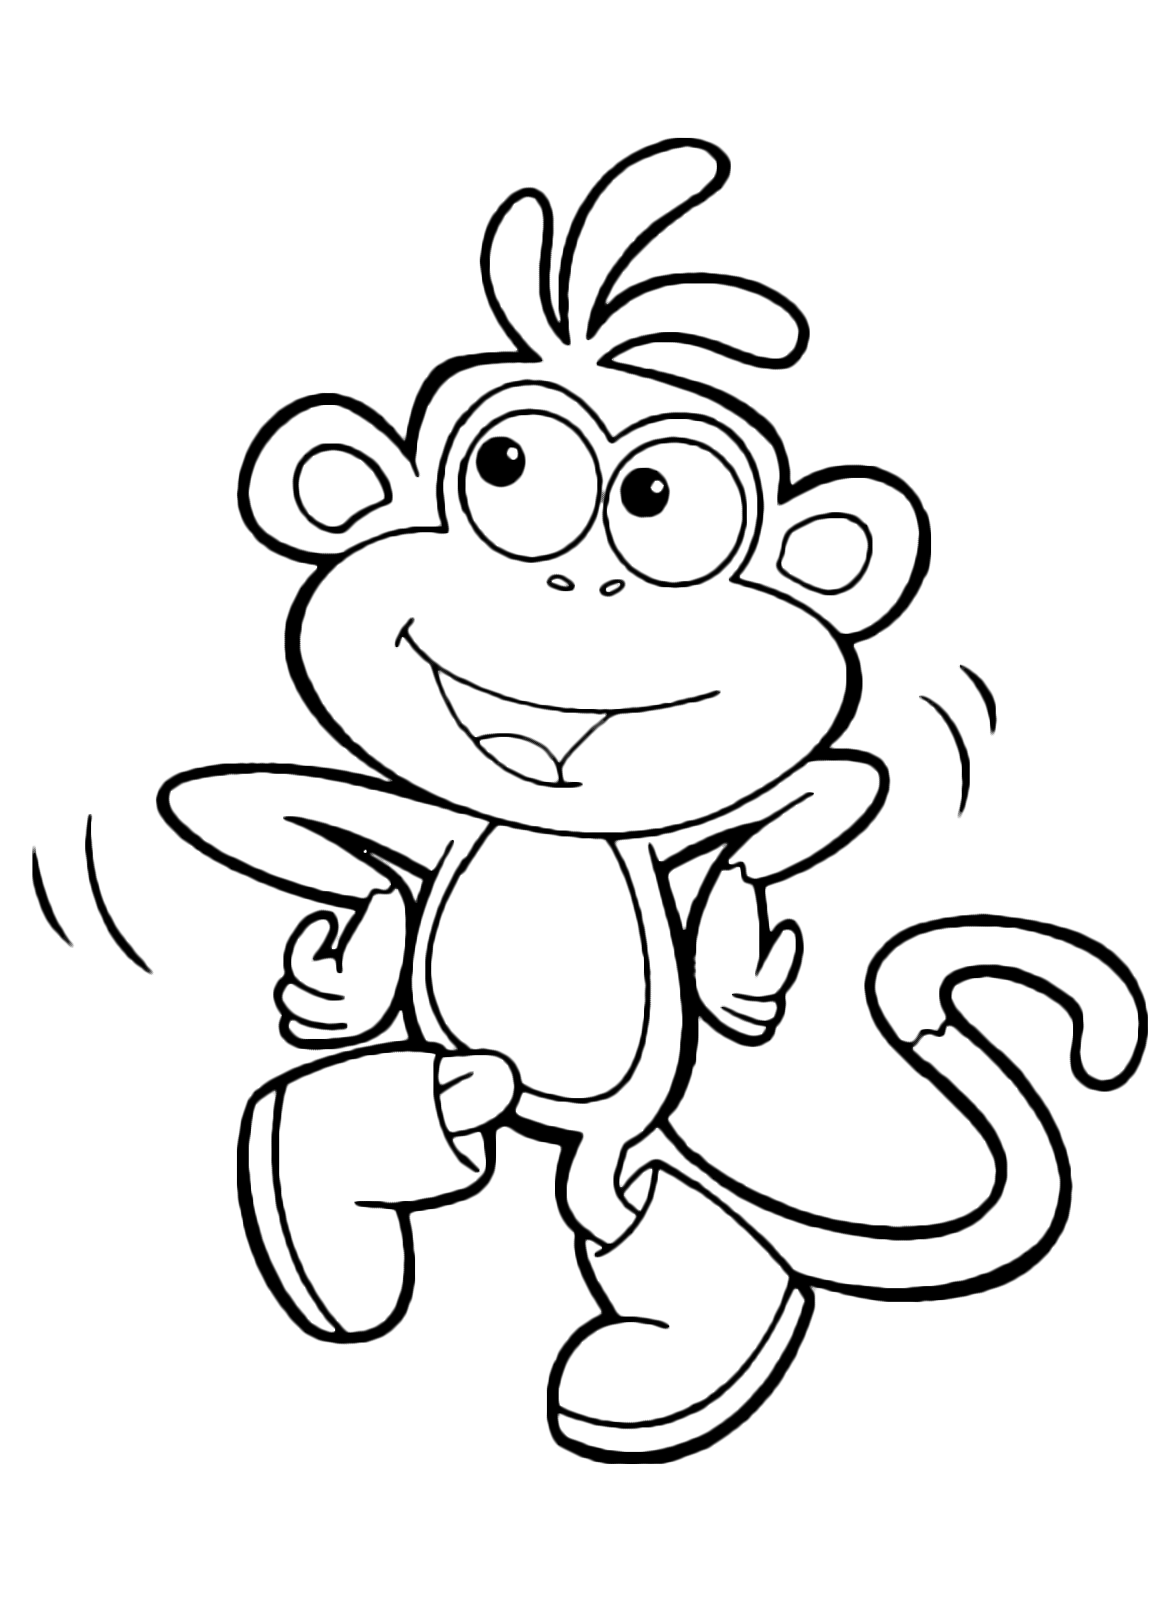 Dora the Explorer - Boots the monkey dancing happy